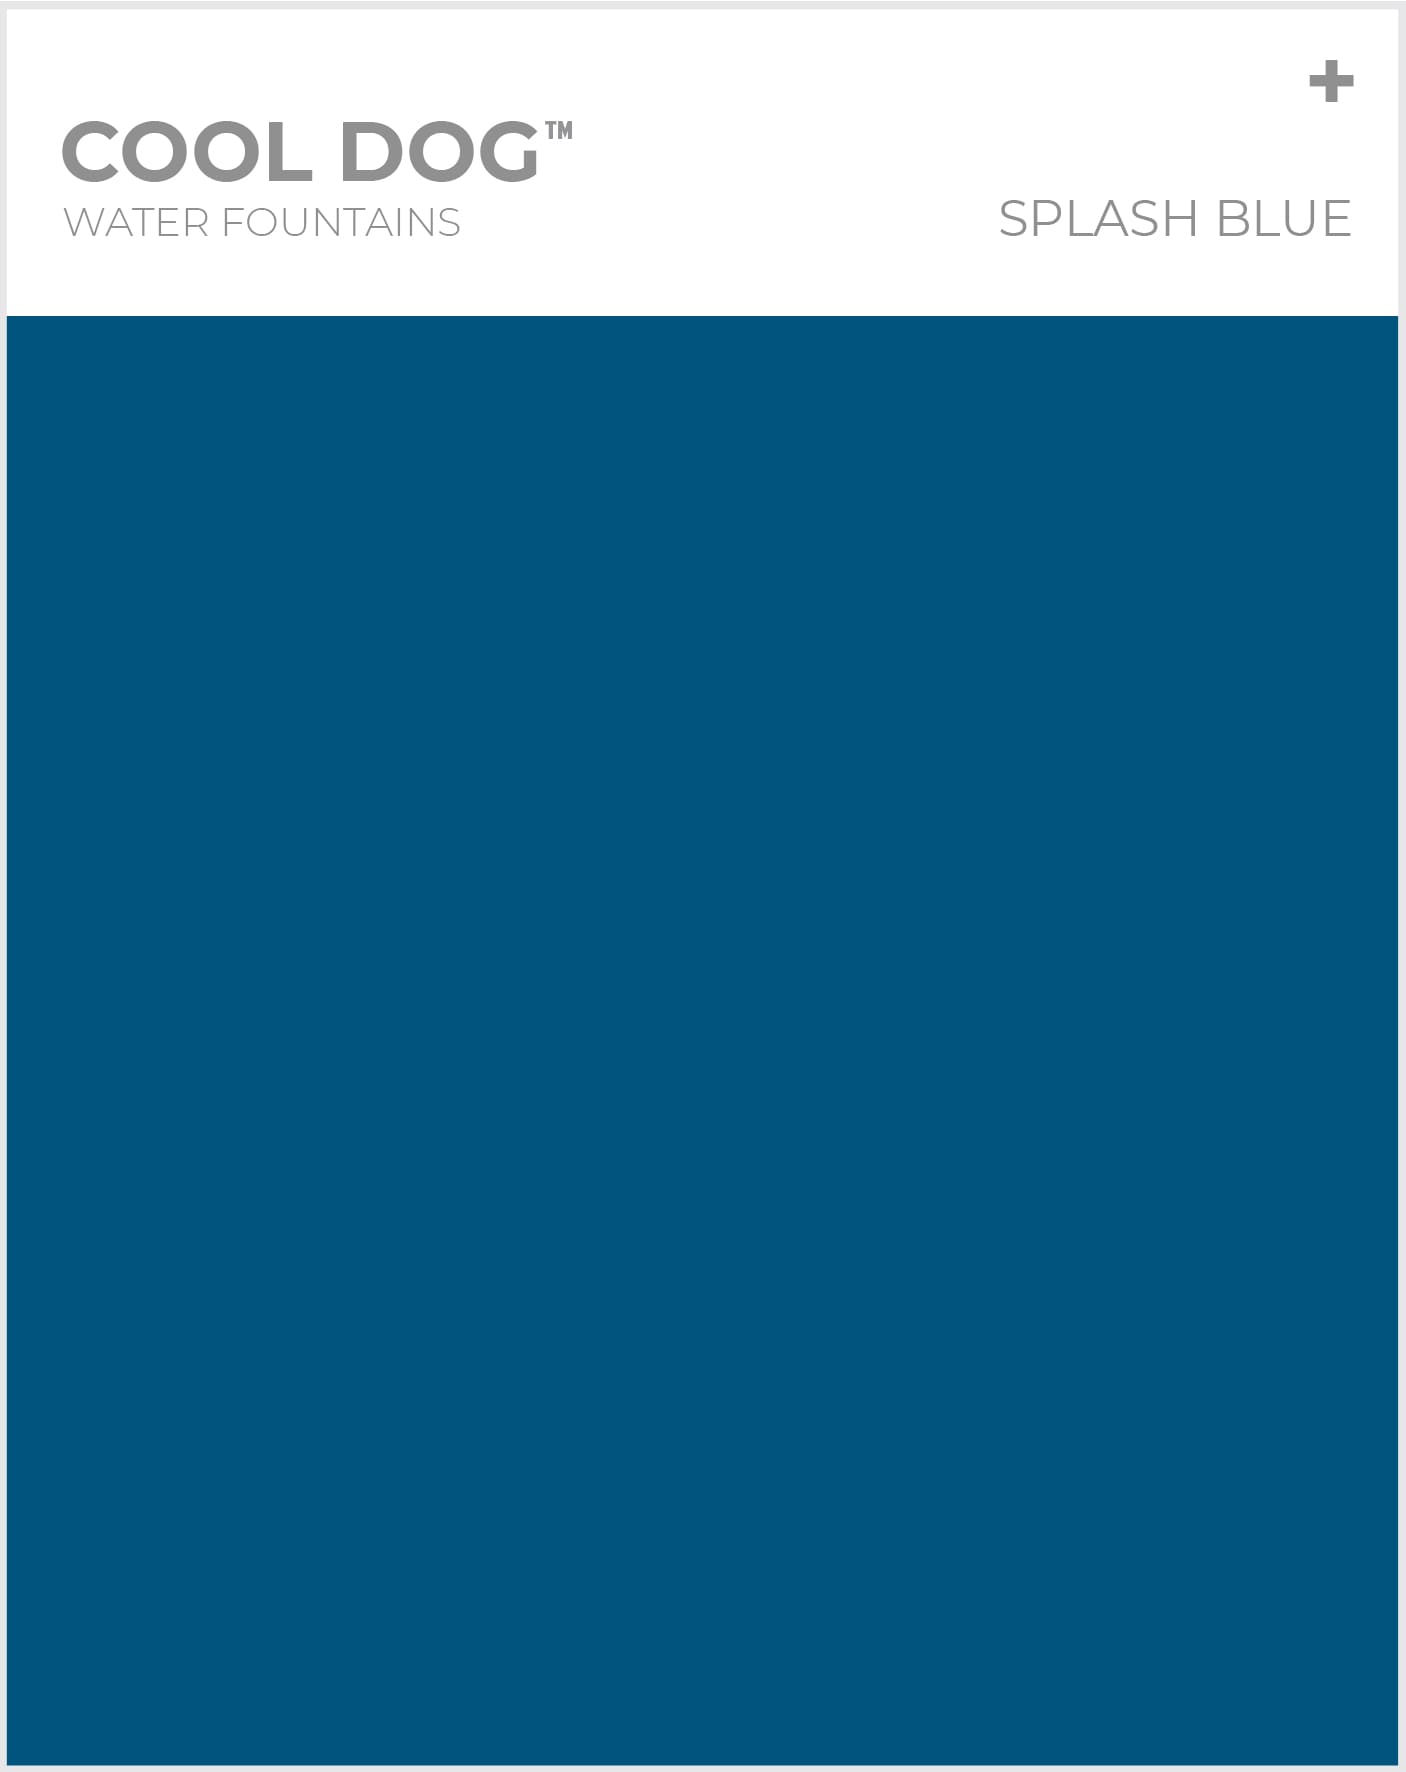 Cool Dog Water Fountains - Splash Blue